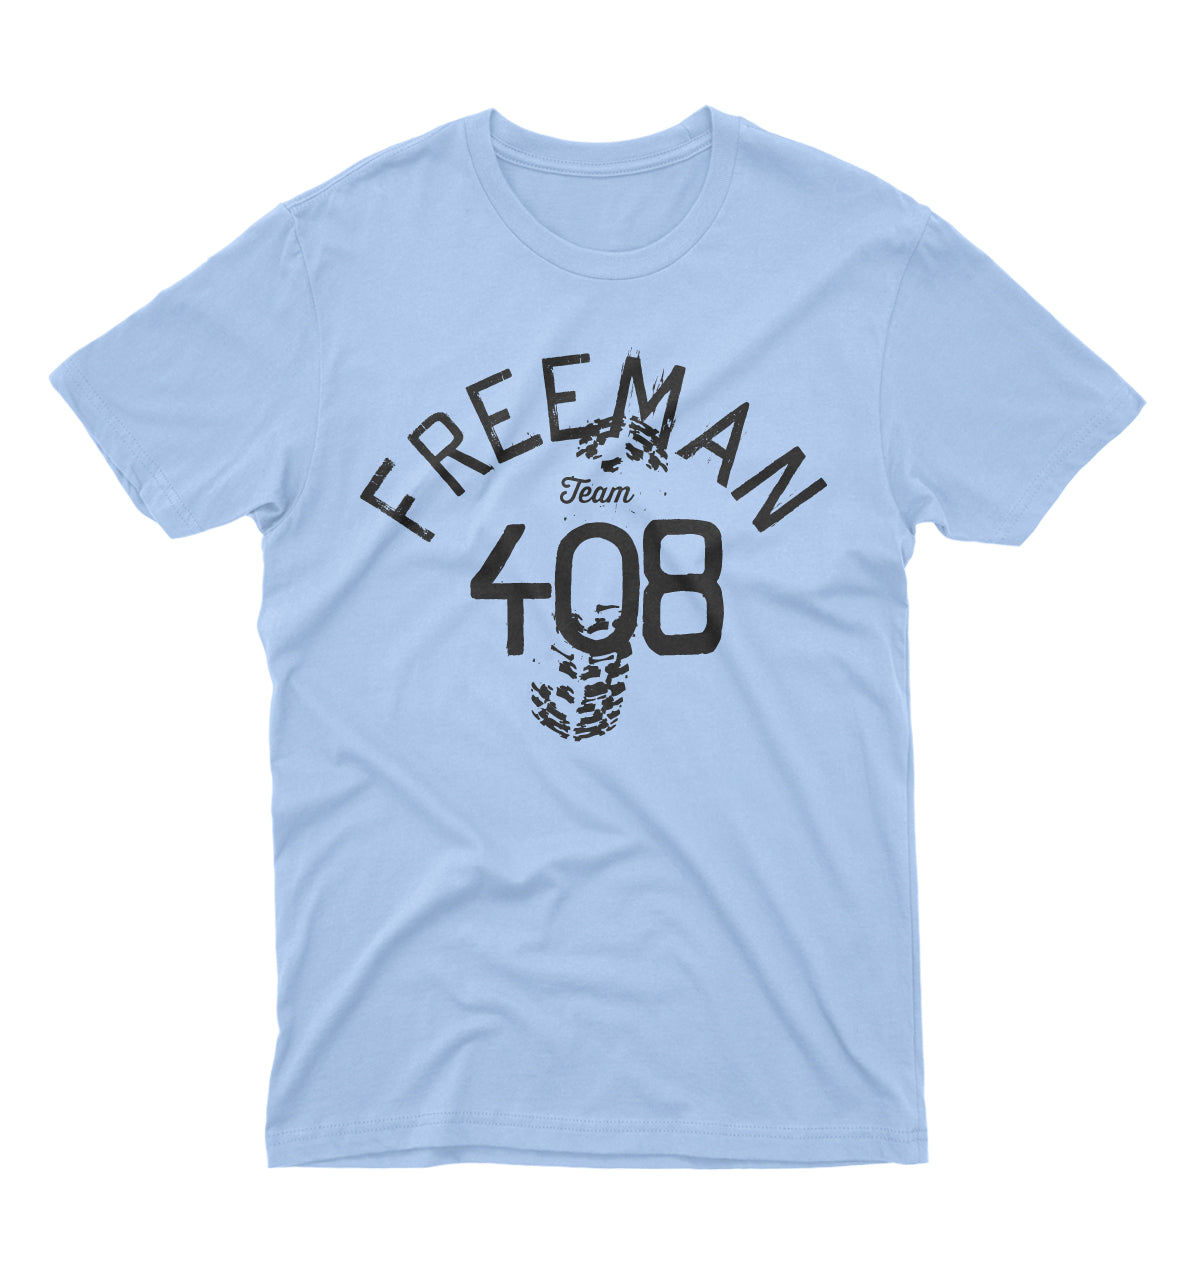 Freeman 408 Tire Mens Tee